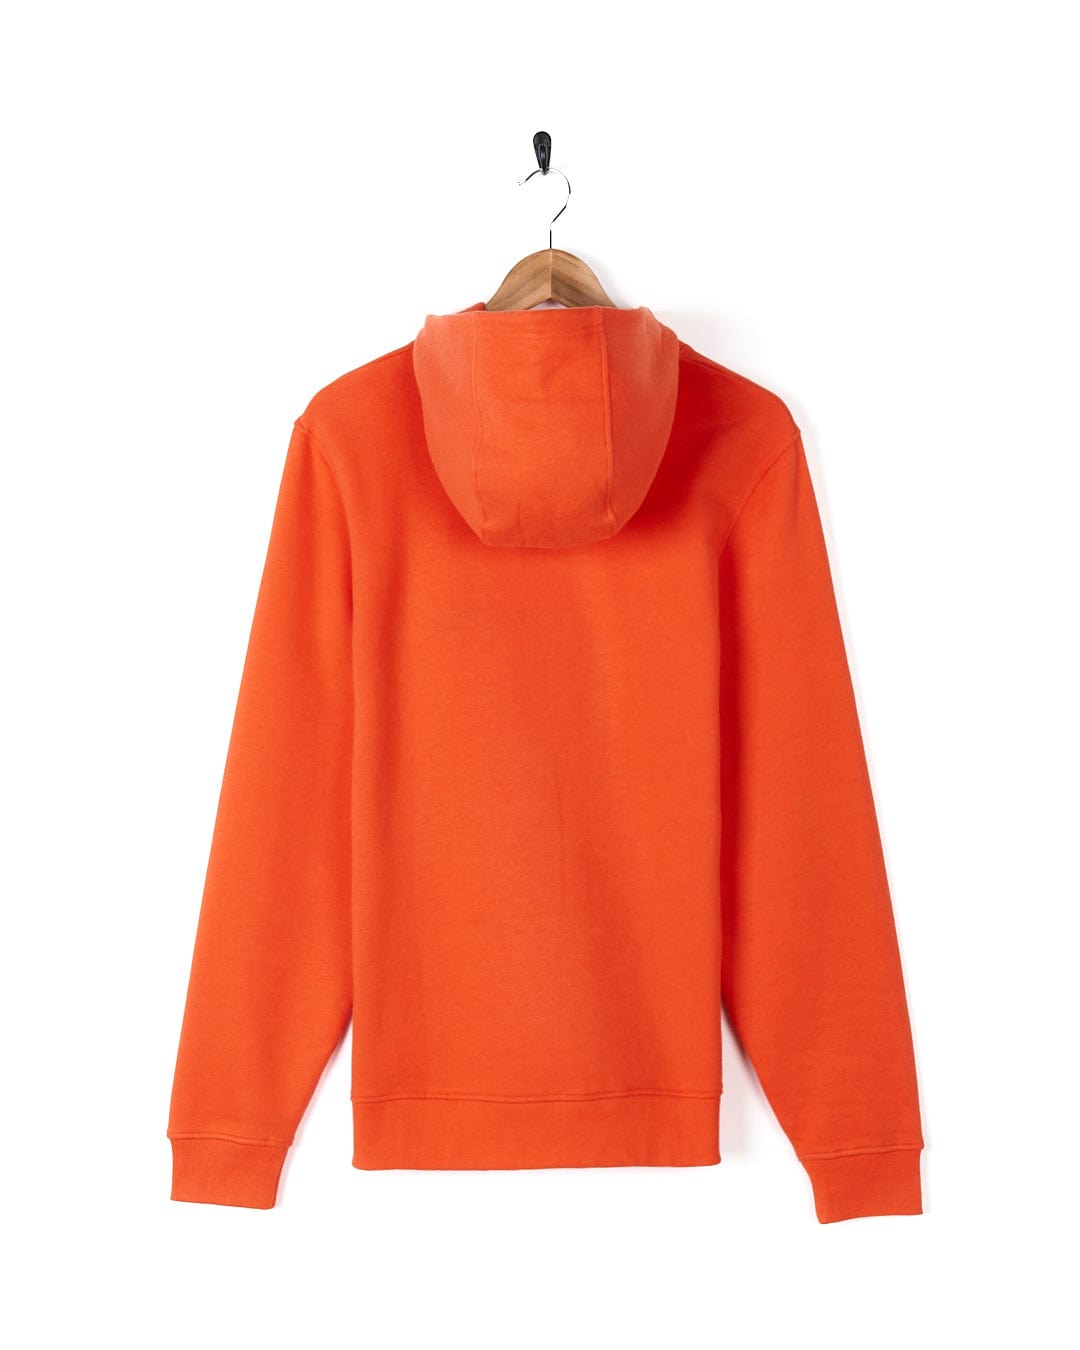 A Saltrock branded Reflect - Mens Pop Hoodie - Orange made of a soft cotton blend, hanging on a hanger.